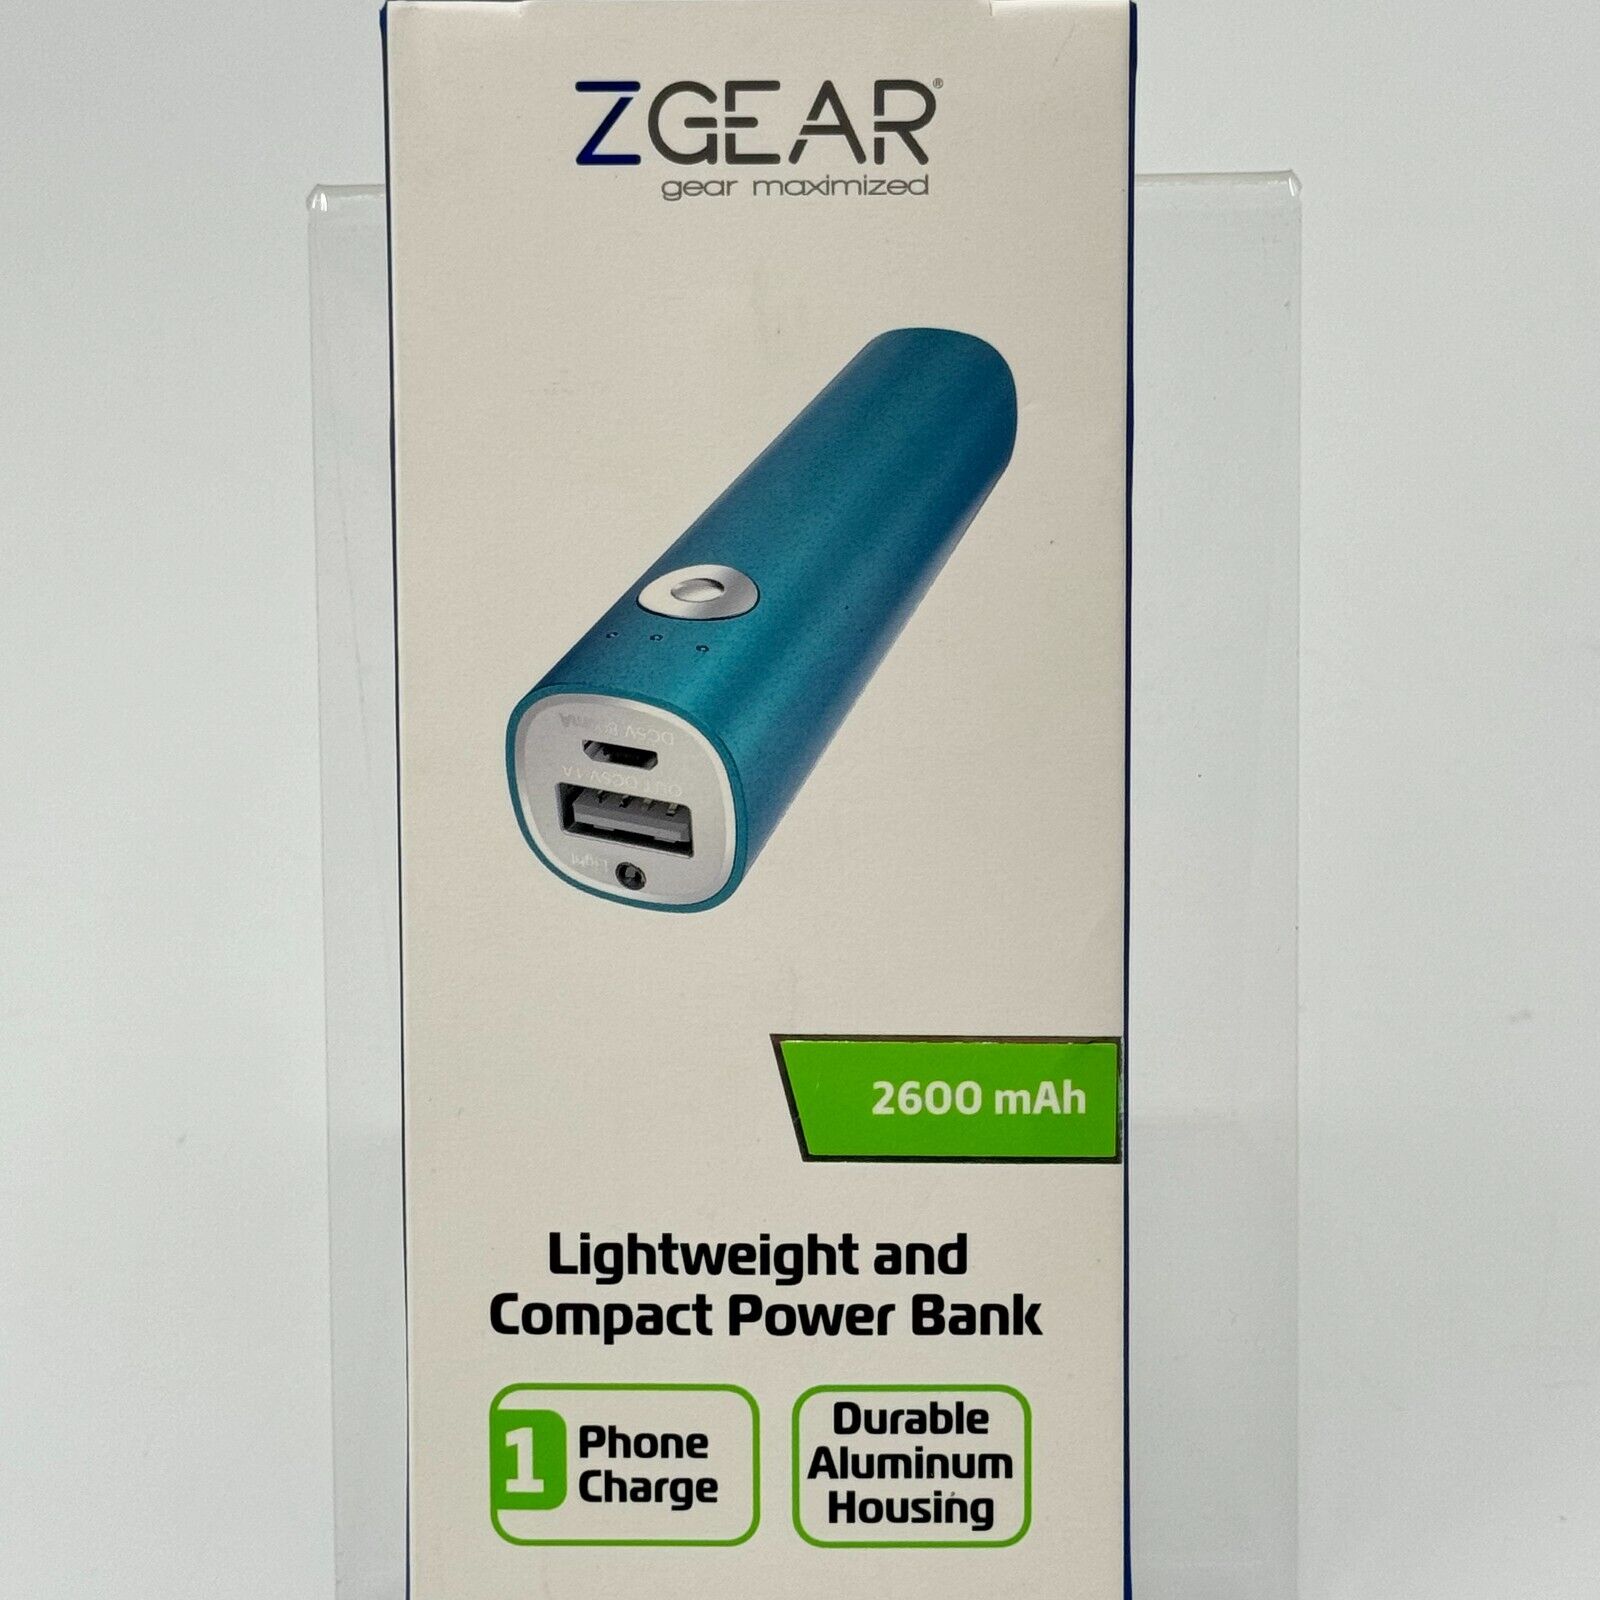 Zgear Lightweight & Compact Power Bank 2600 mAh Phone Charge Blue Micro USB Cord